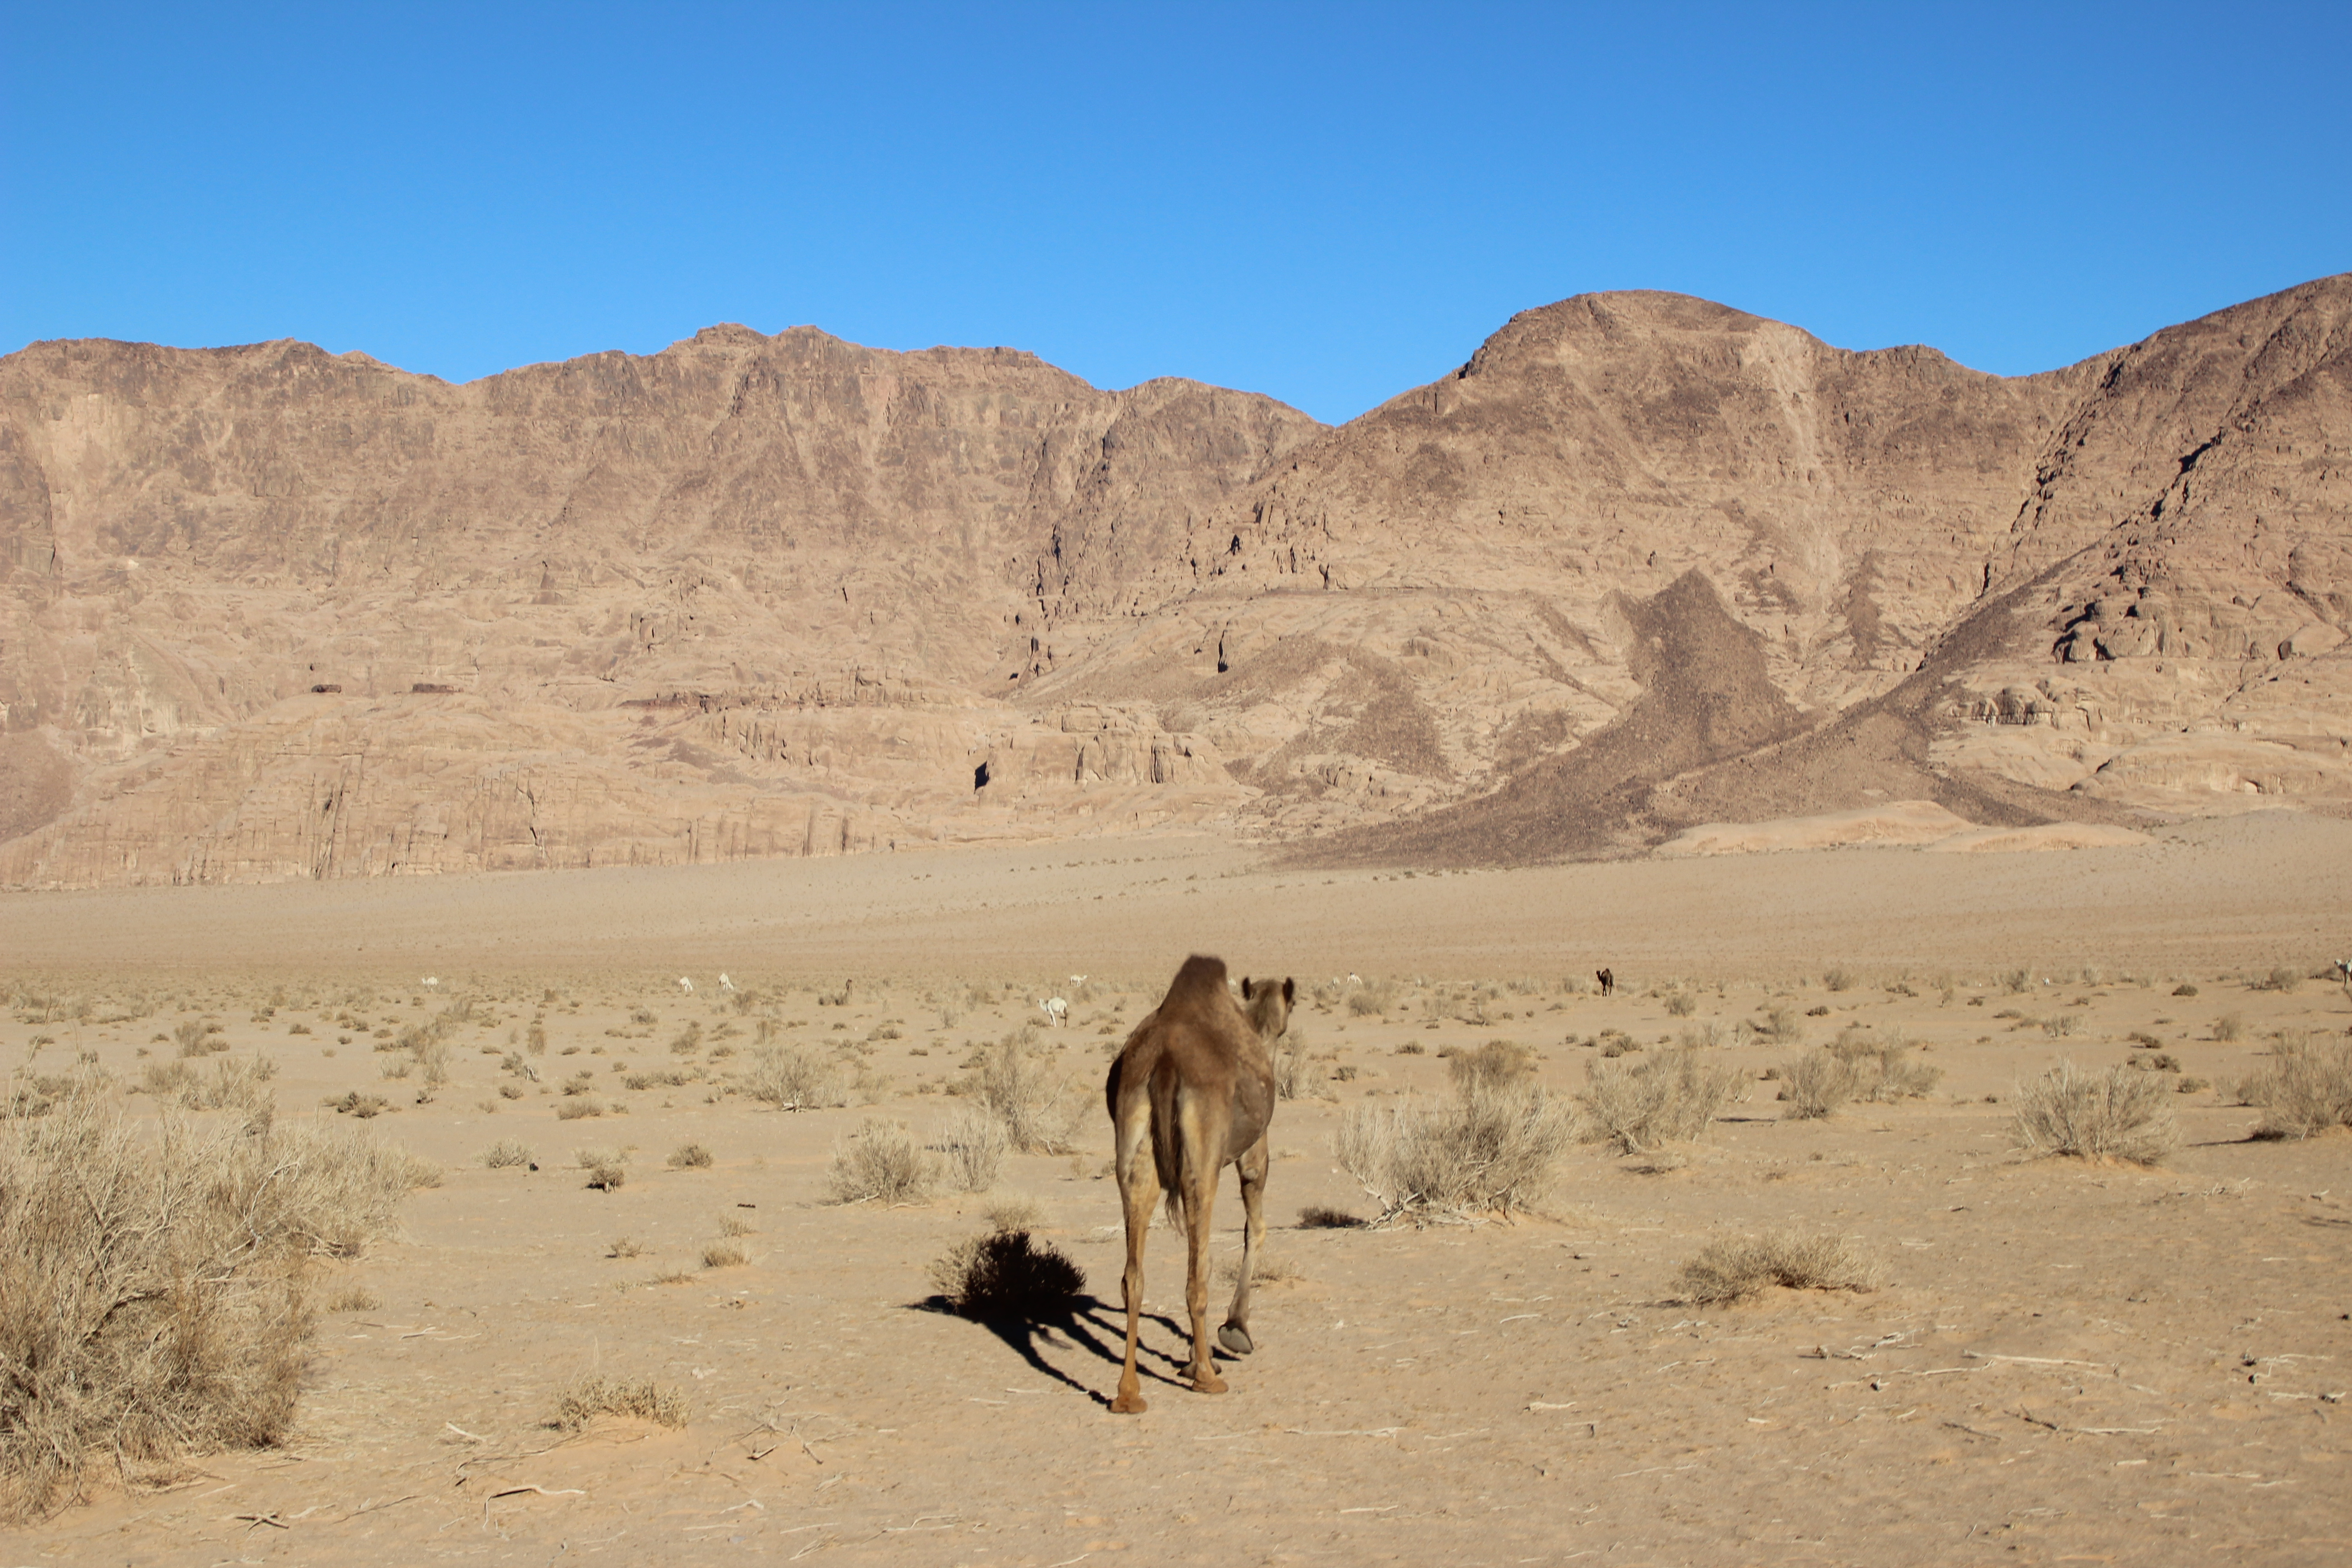 A wild camel in the desert